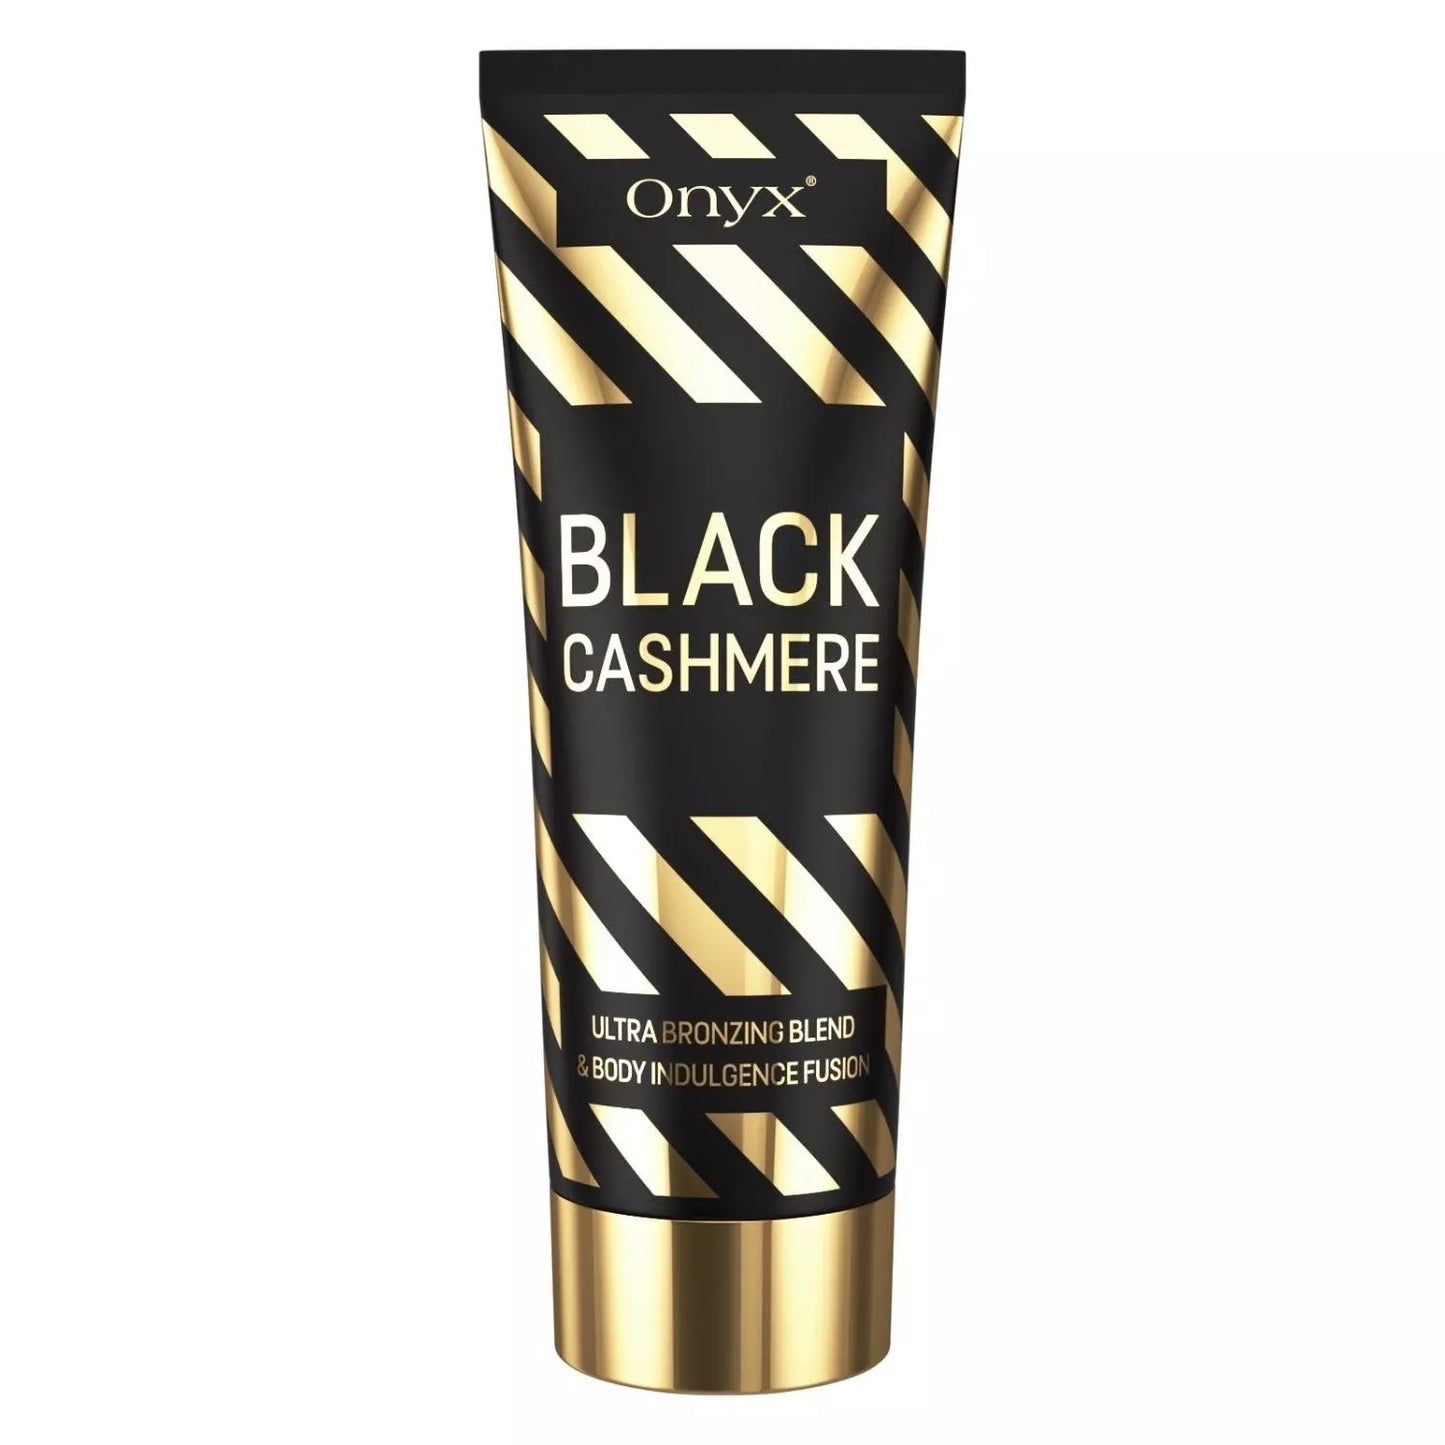 Black Cashmere dark tanning lotion with ultra bronzing blend